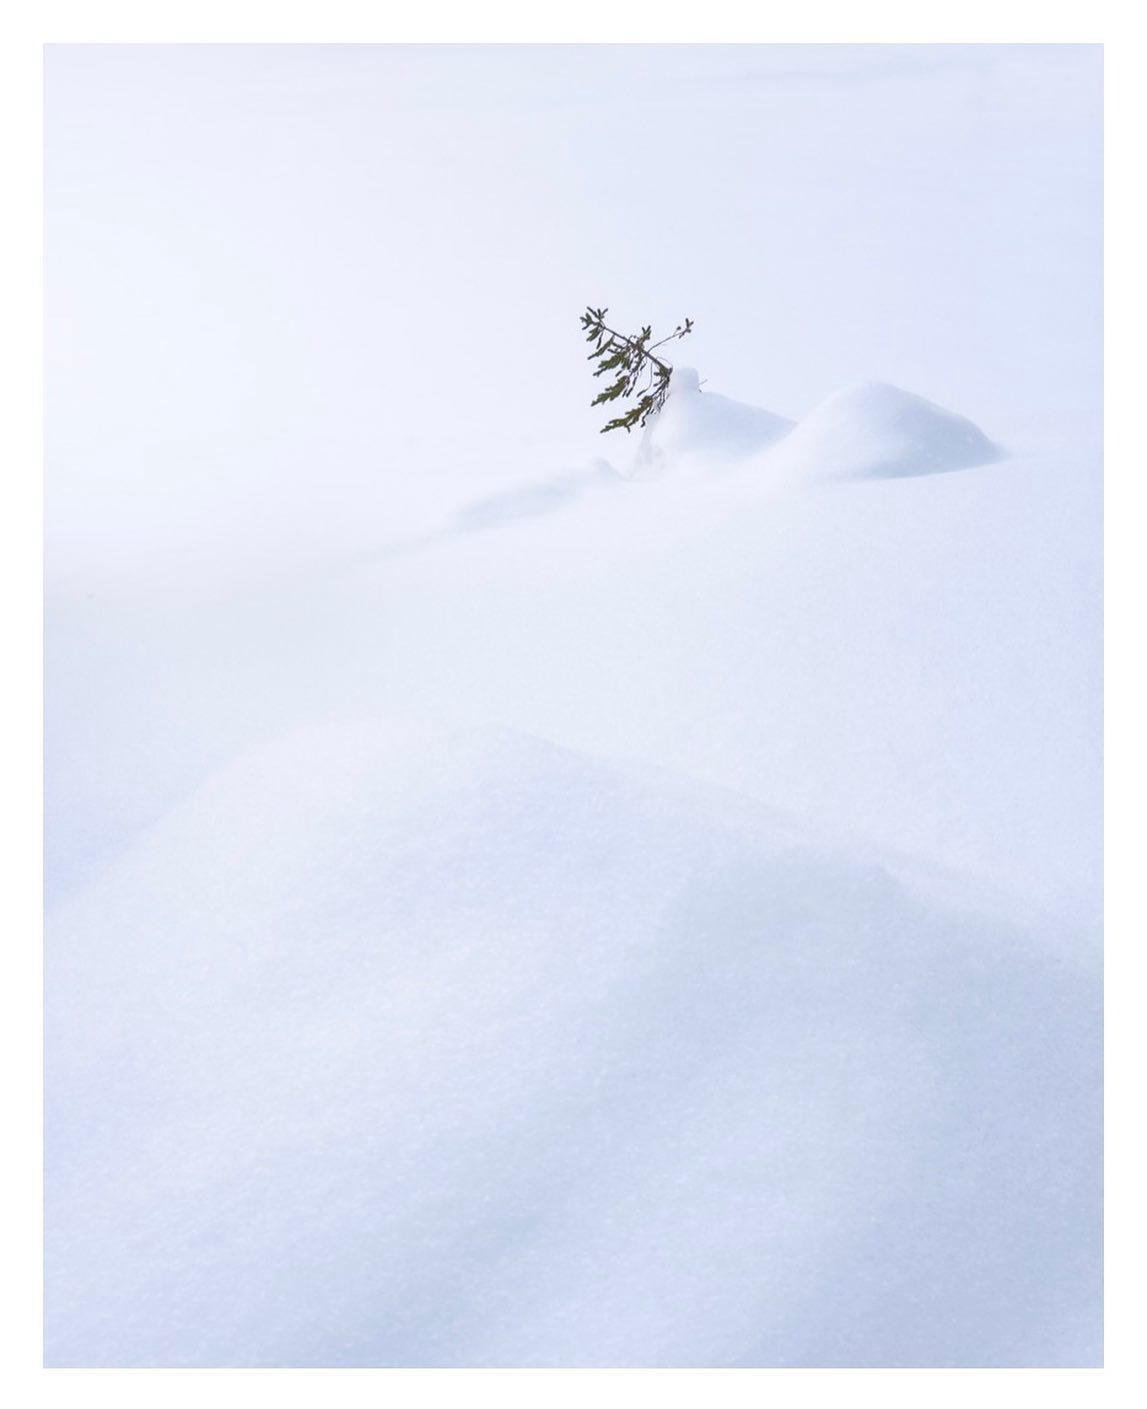 image  1 Hans Gunnar Aslaksen - Taken after a heavy snowfall last year